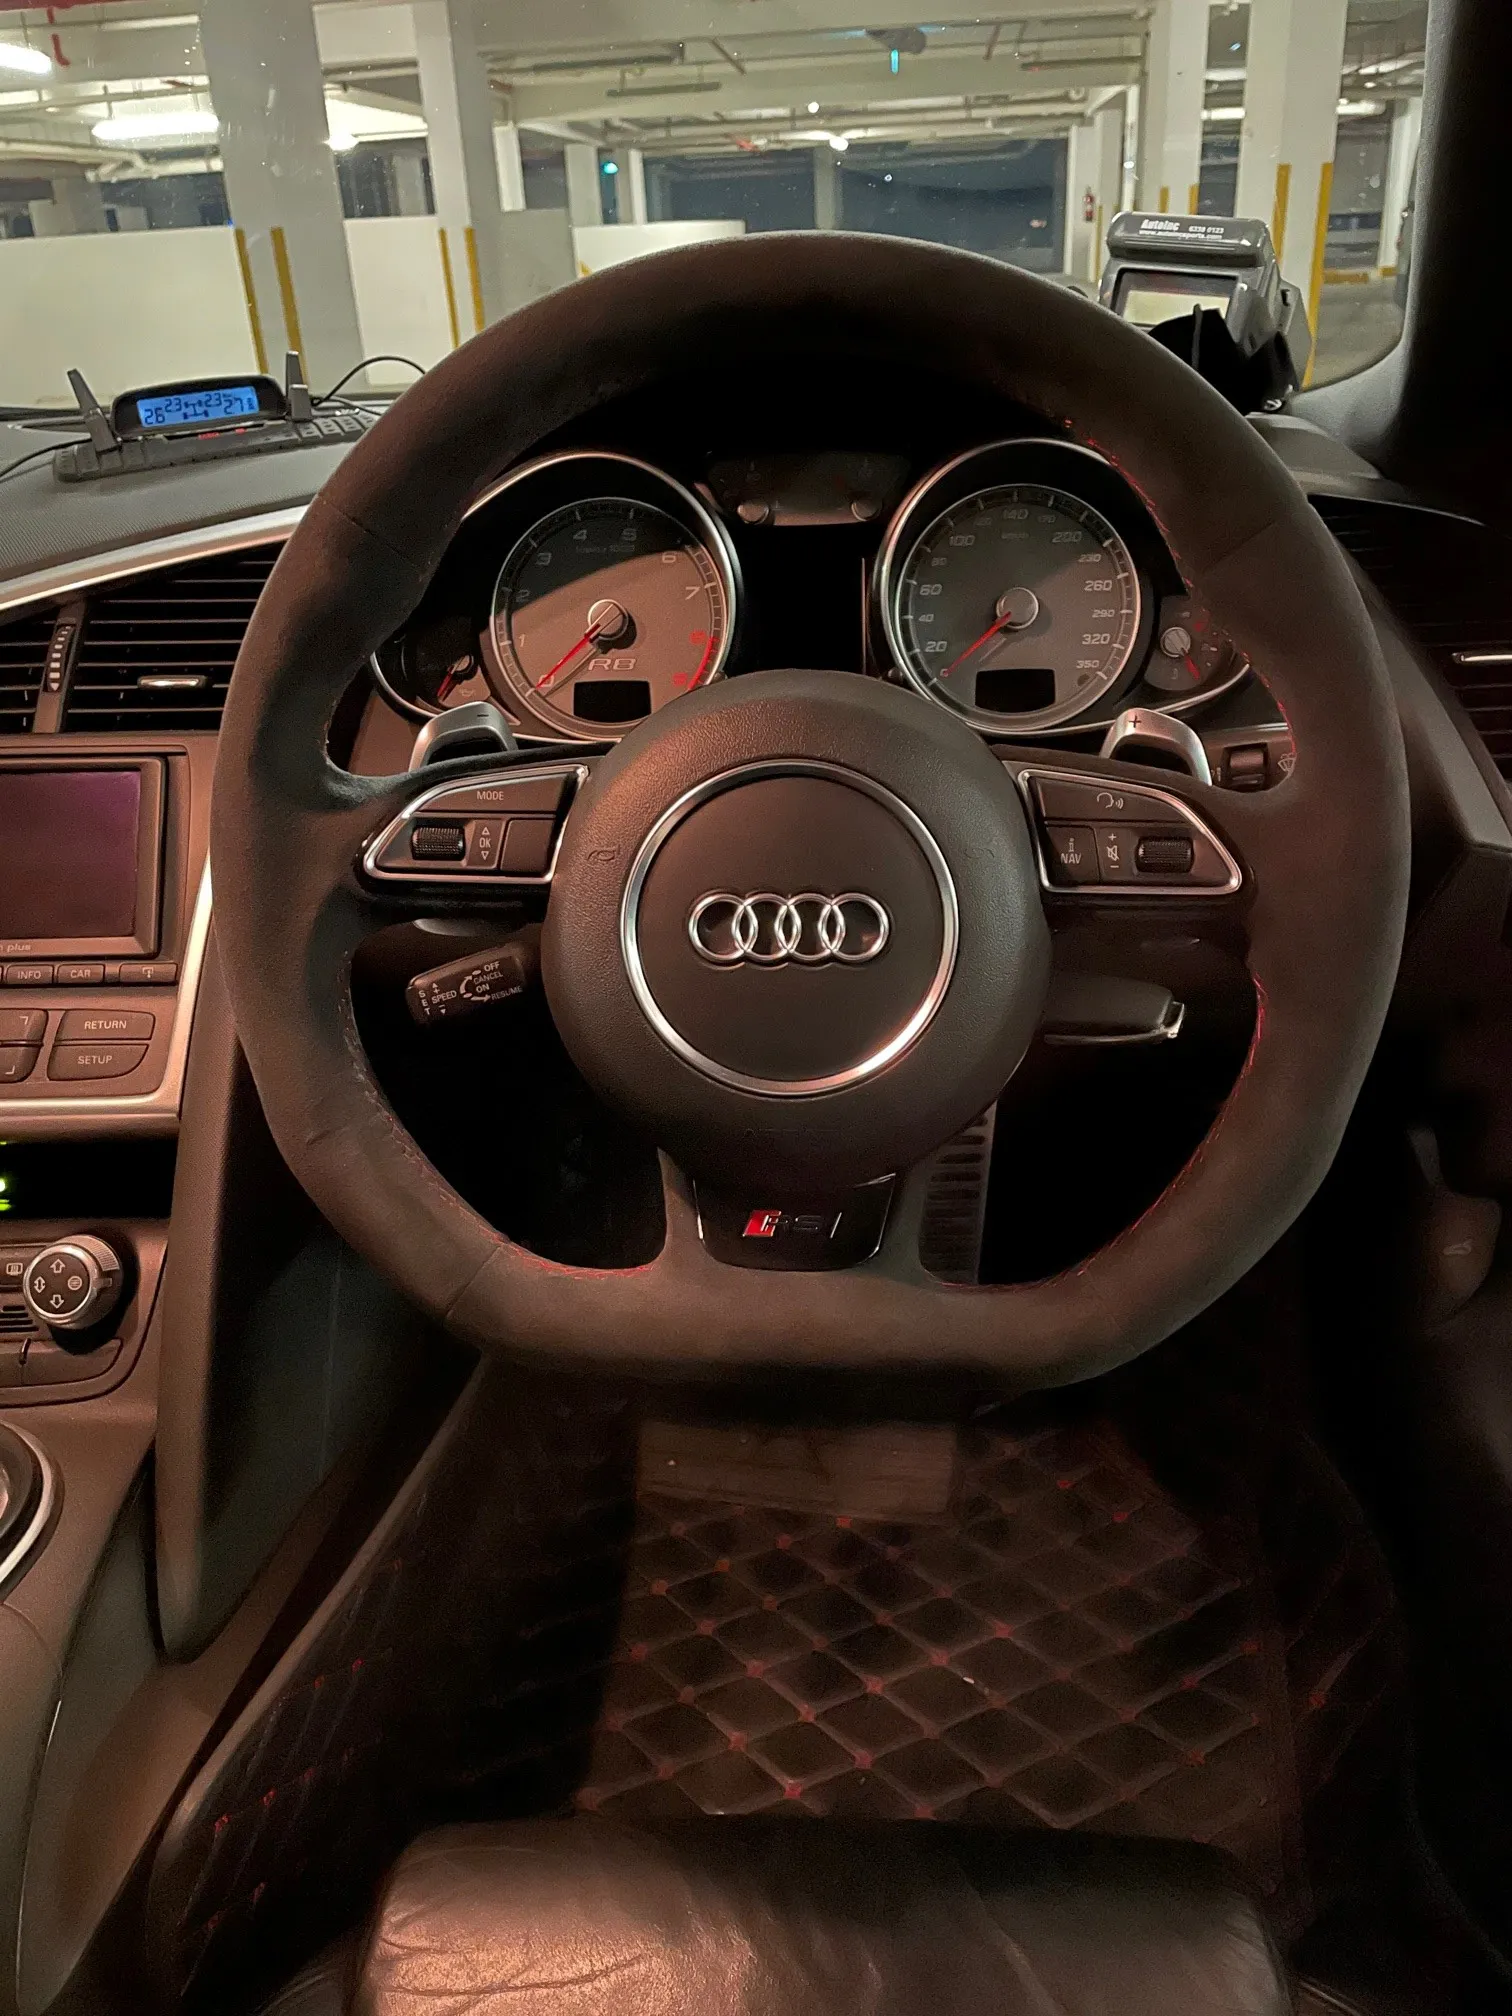 Modhub Steering Wheels - Audi R8